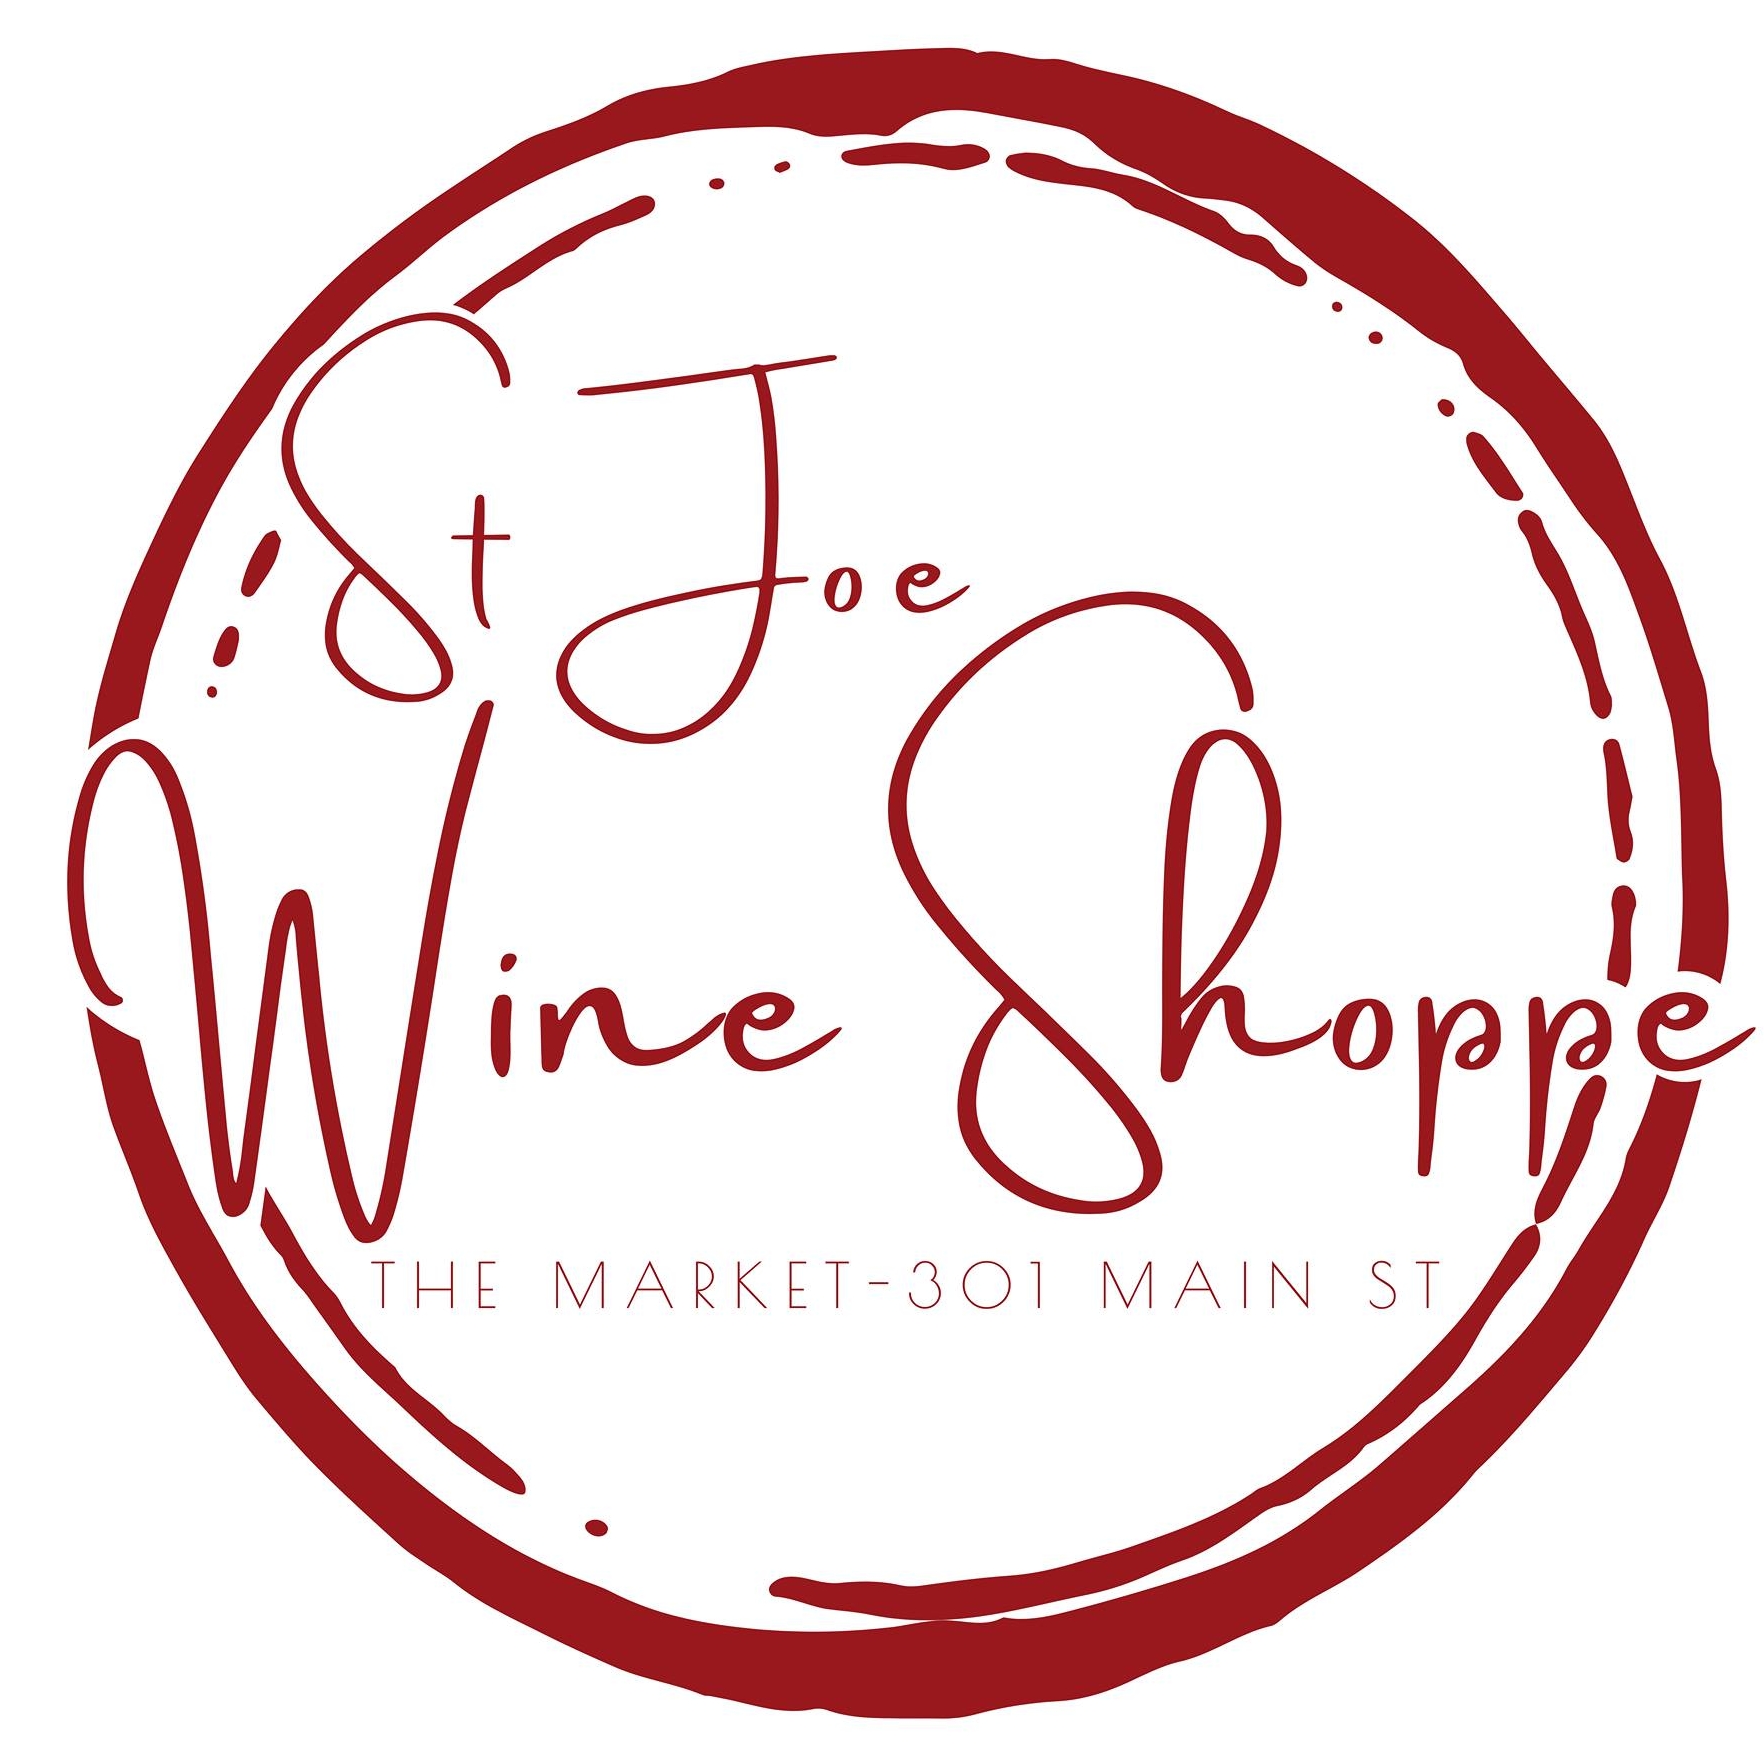 St. Joe Wine Shoppe Logo